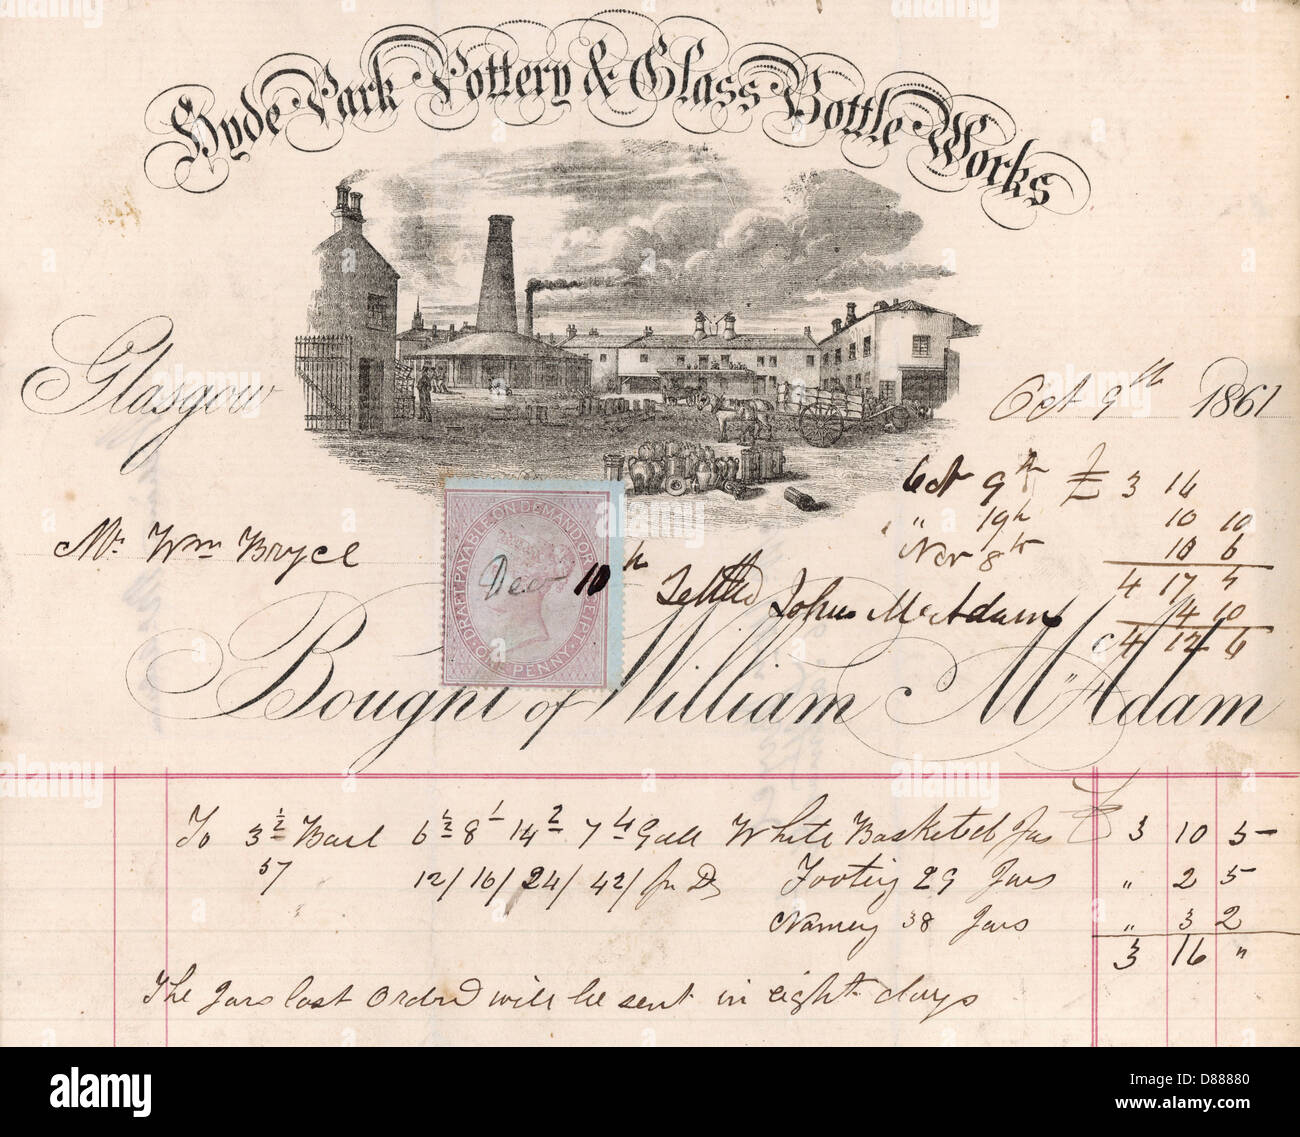 WILLIAM MCADAM BILL 1861 Stock Photo